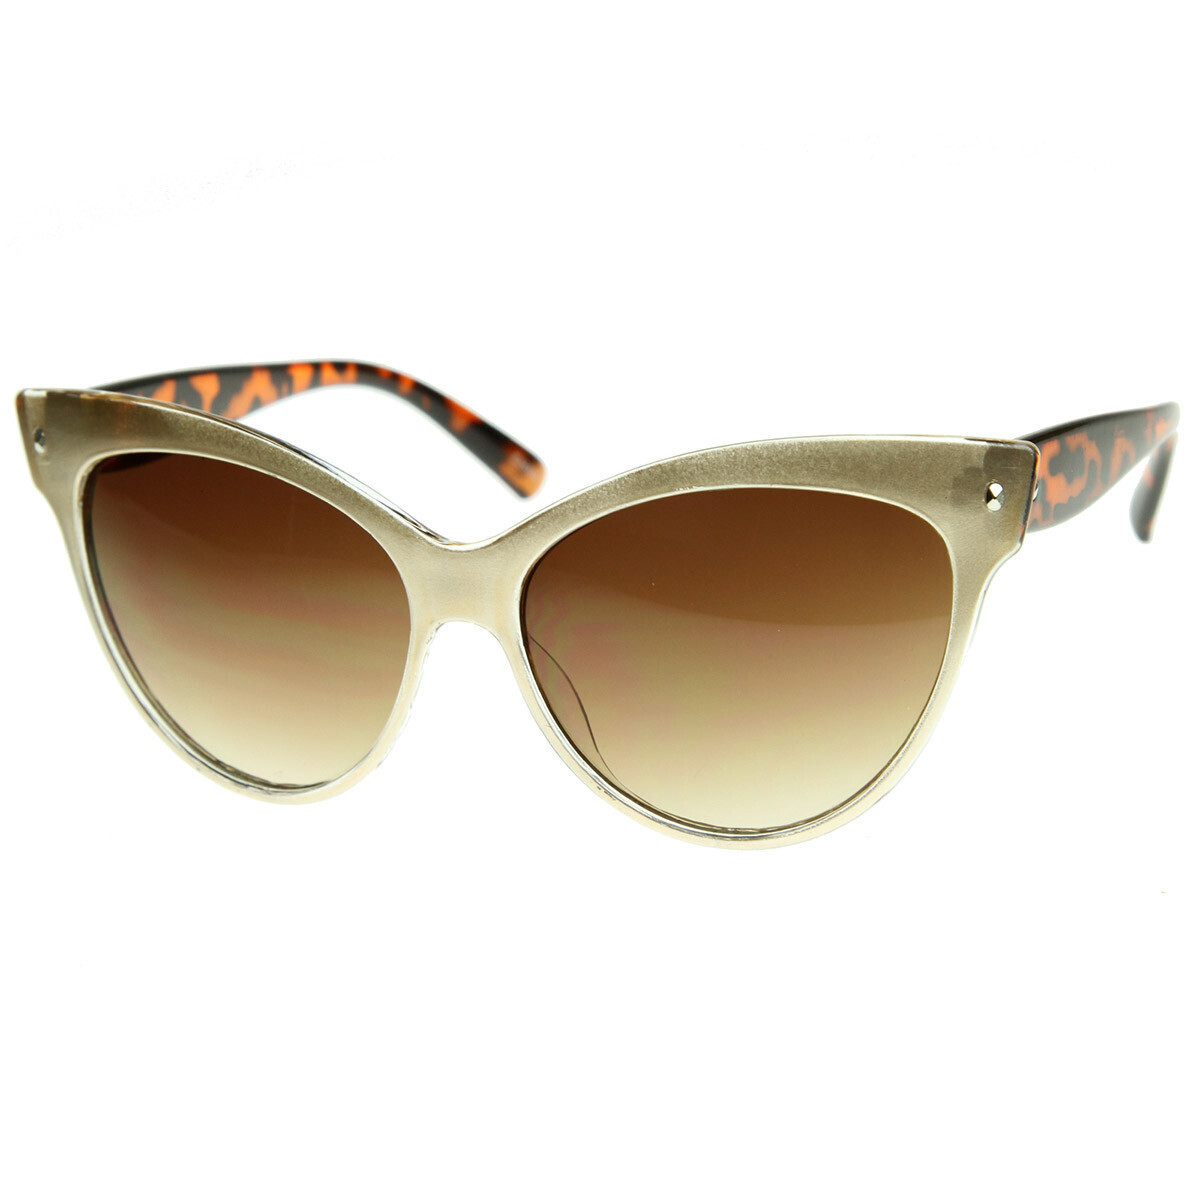 High Pointed Vintage Mod Womens Fashion Cat Eye Sunglasses - 8462 - Tortoise